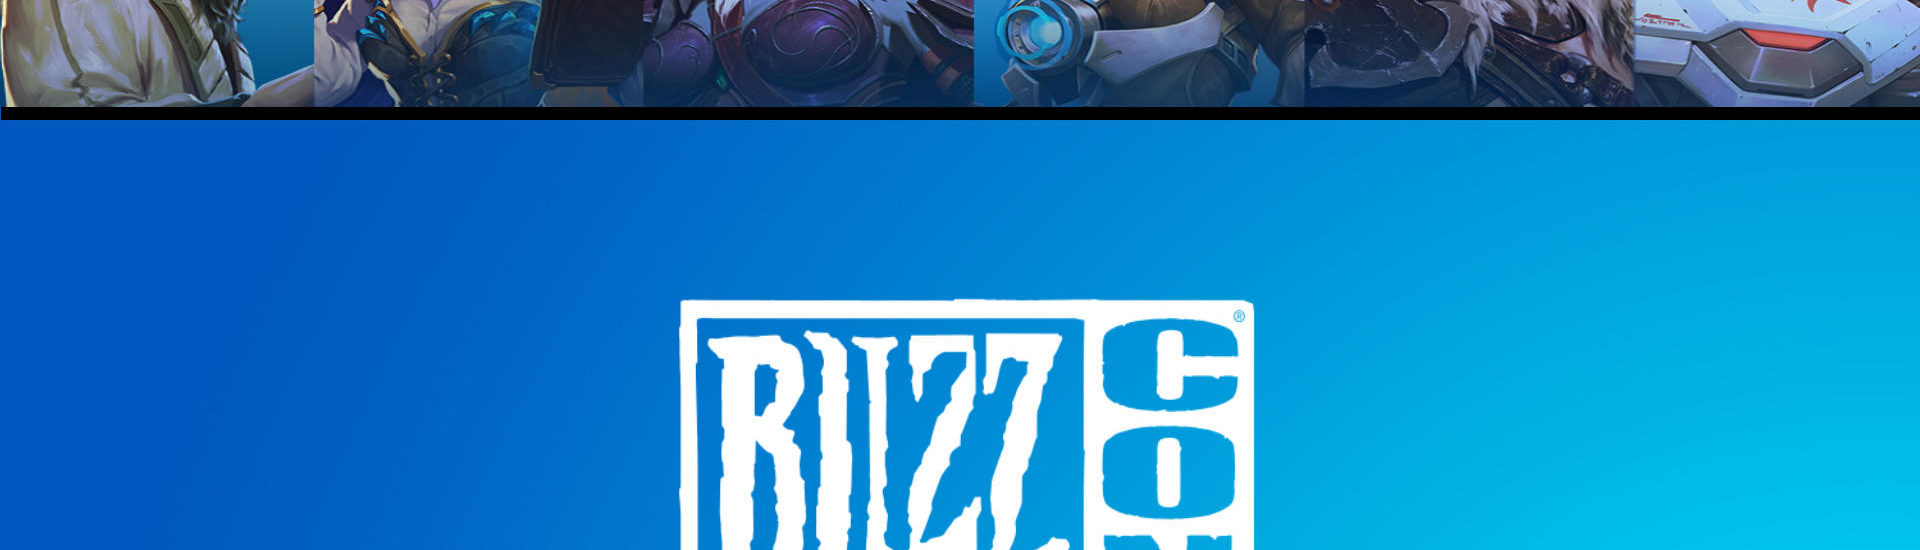 Blizzard Entertainment: BlizzCon Reloaded?